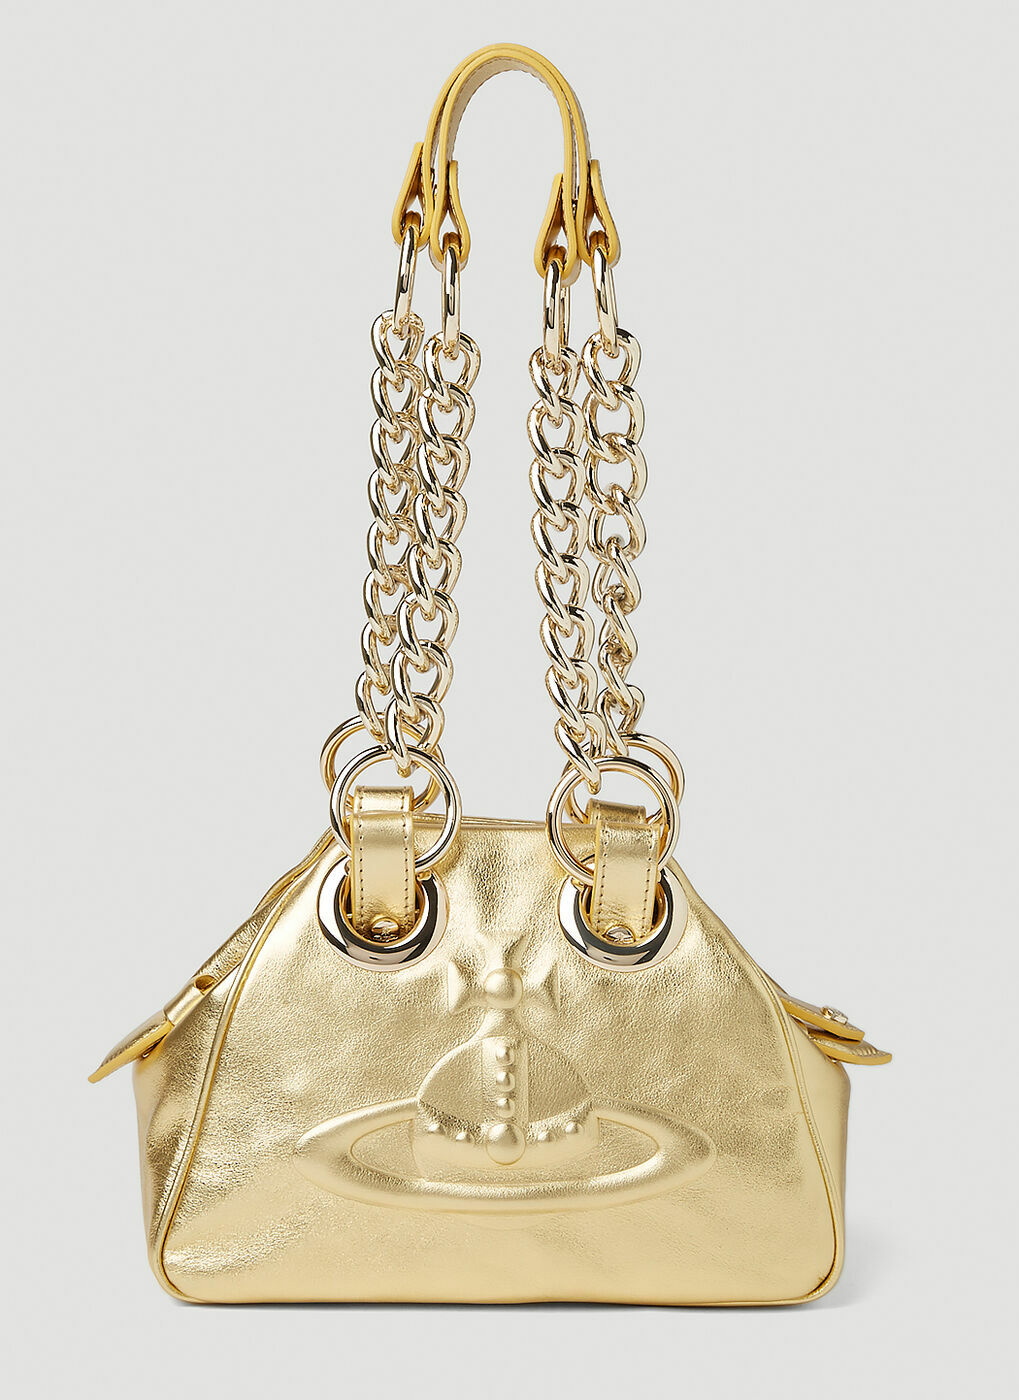 Vivienne Westwood - Archive Orb Chain Shoulder Bag in Gold